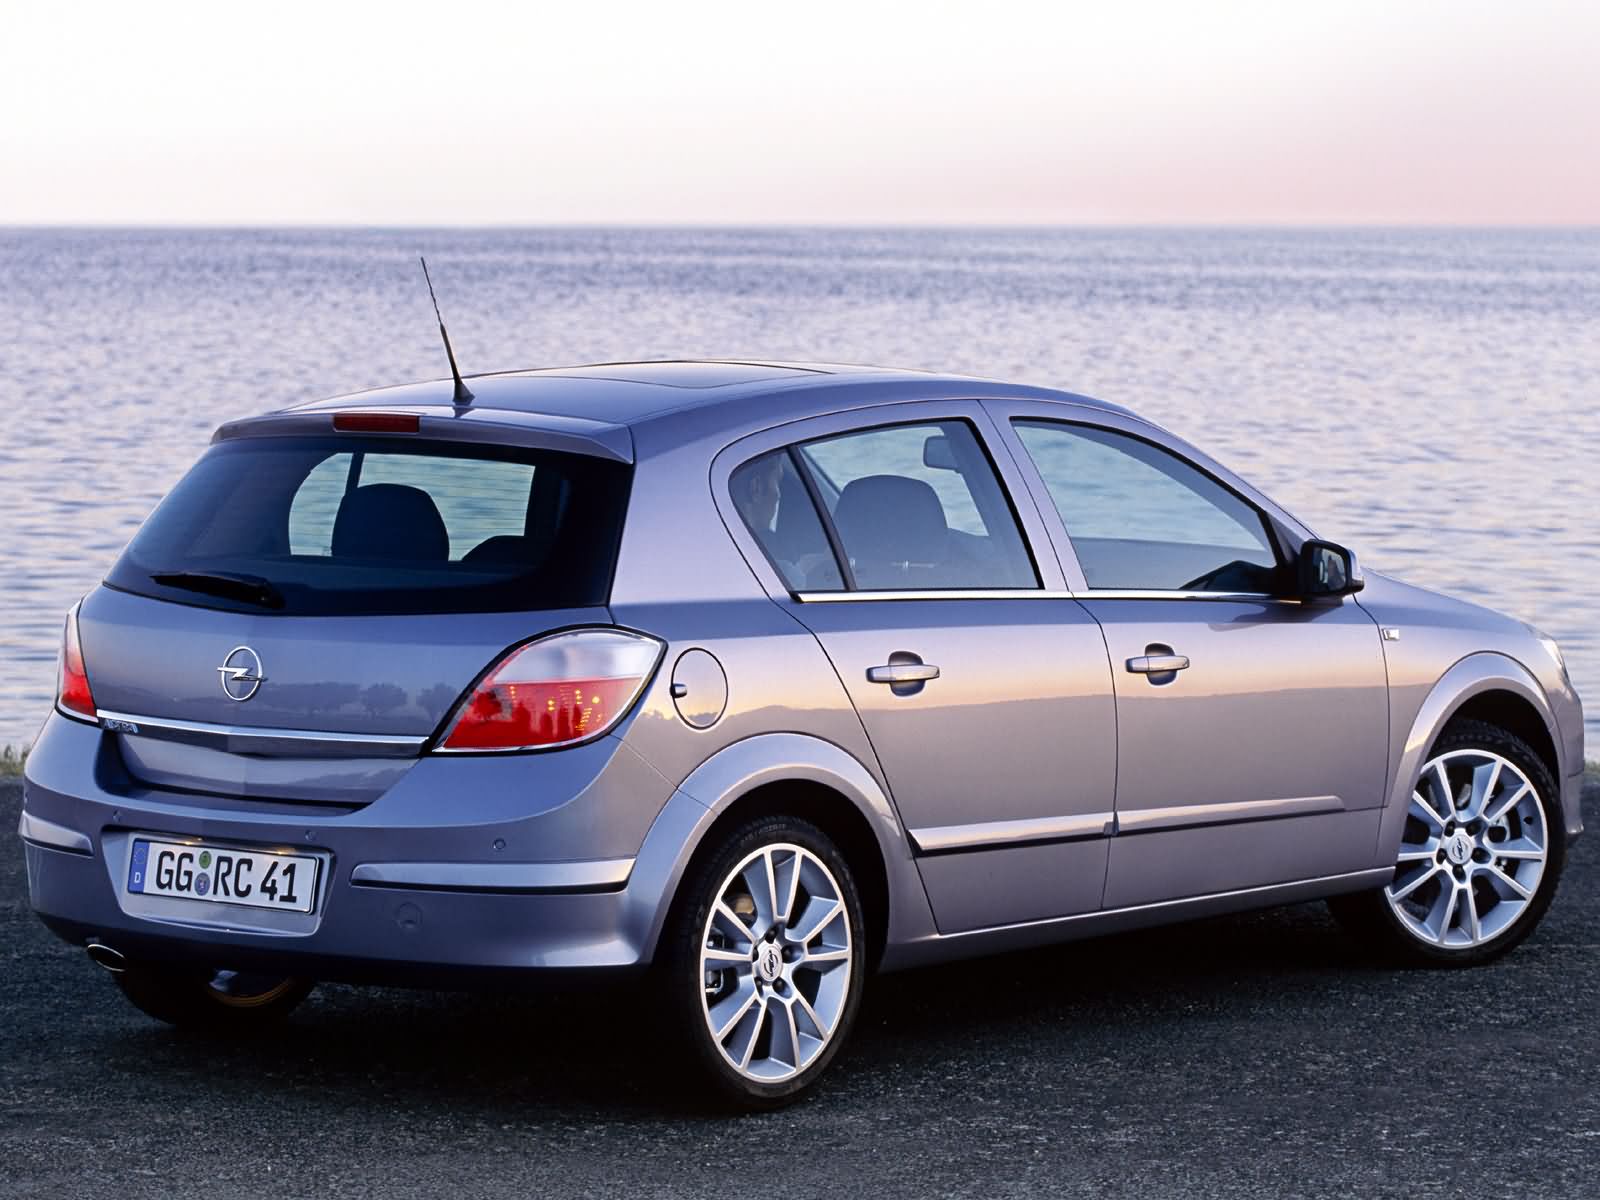 Astra 1.7 download. Opel Astra h (2004-2007). Opel Astra 2004. Opel Astra h 2004.